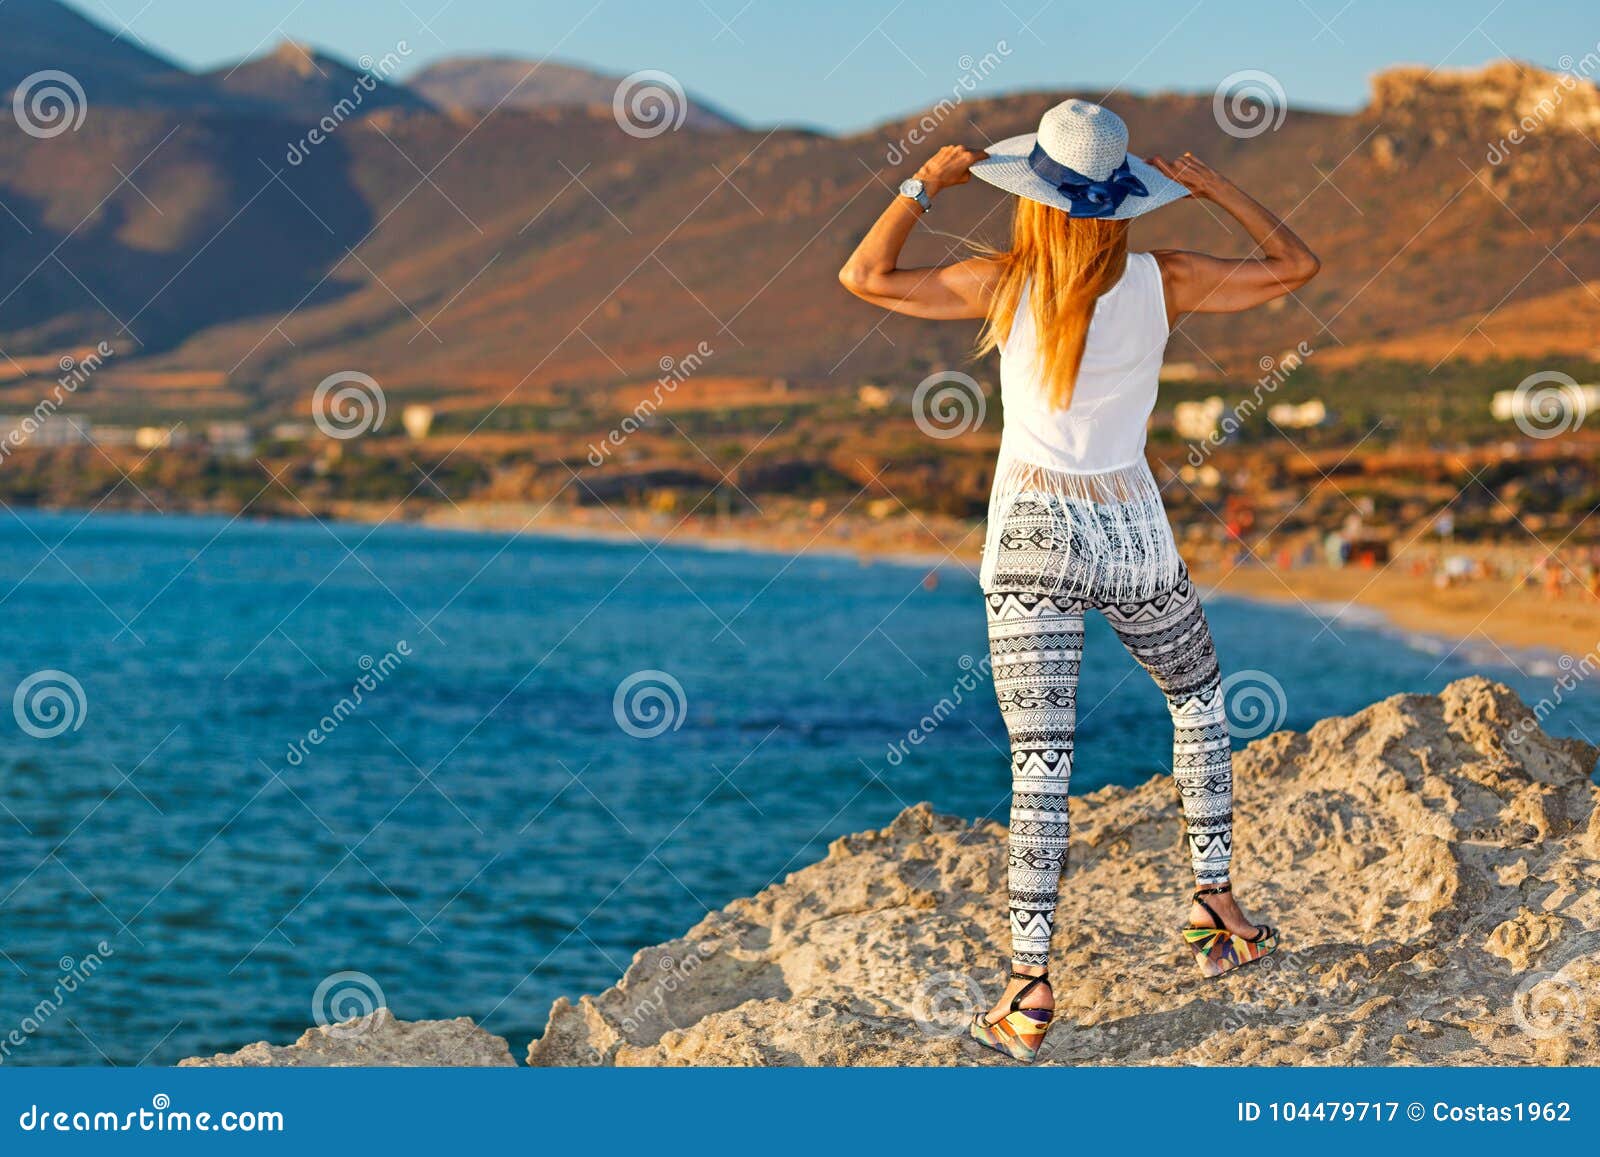 A Woman at the Beach Falassarna of Creta, Greece Stock Image - Image of ...